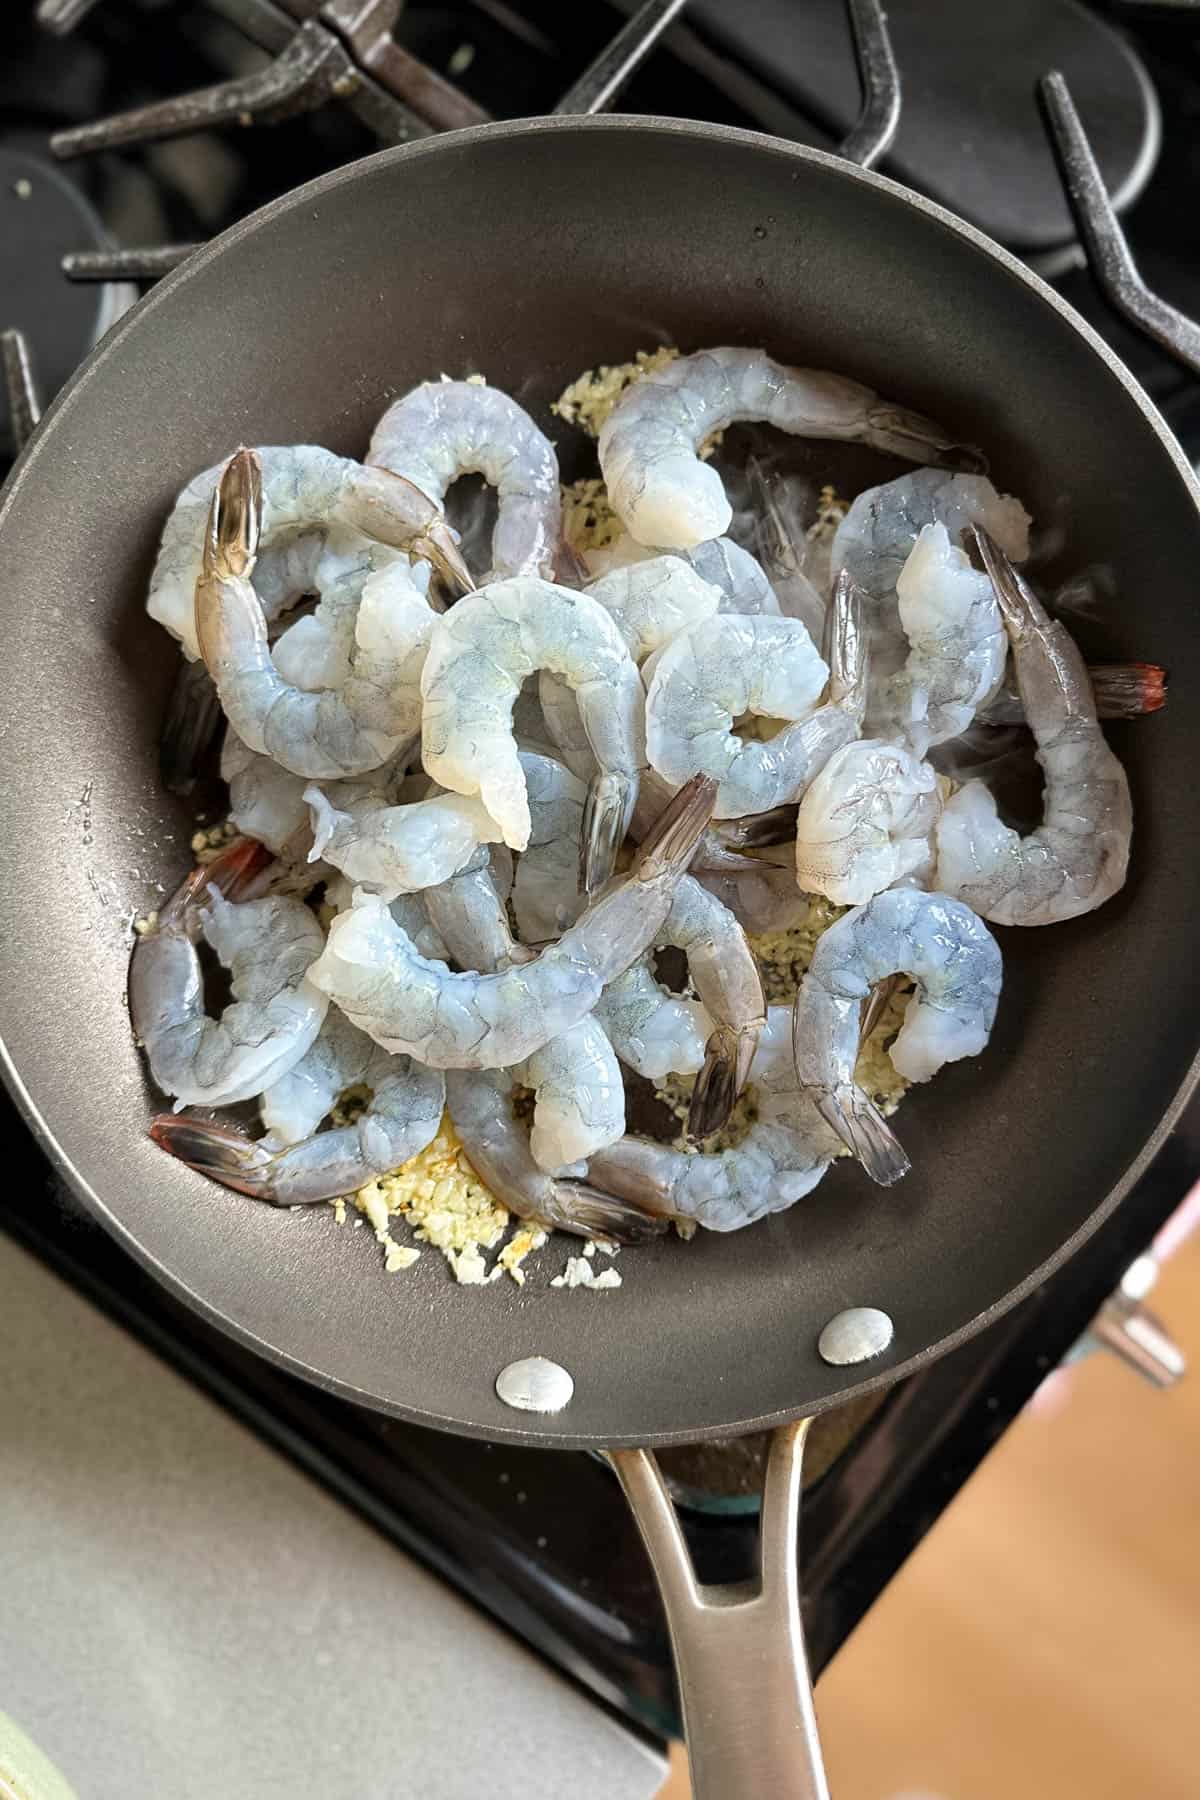 Cooking garlic and shrimp to make paprika shrimp